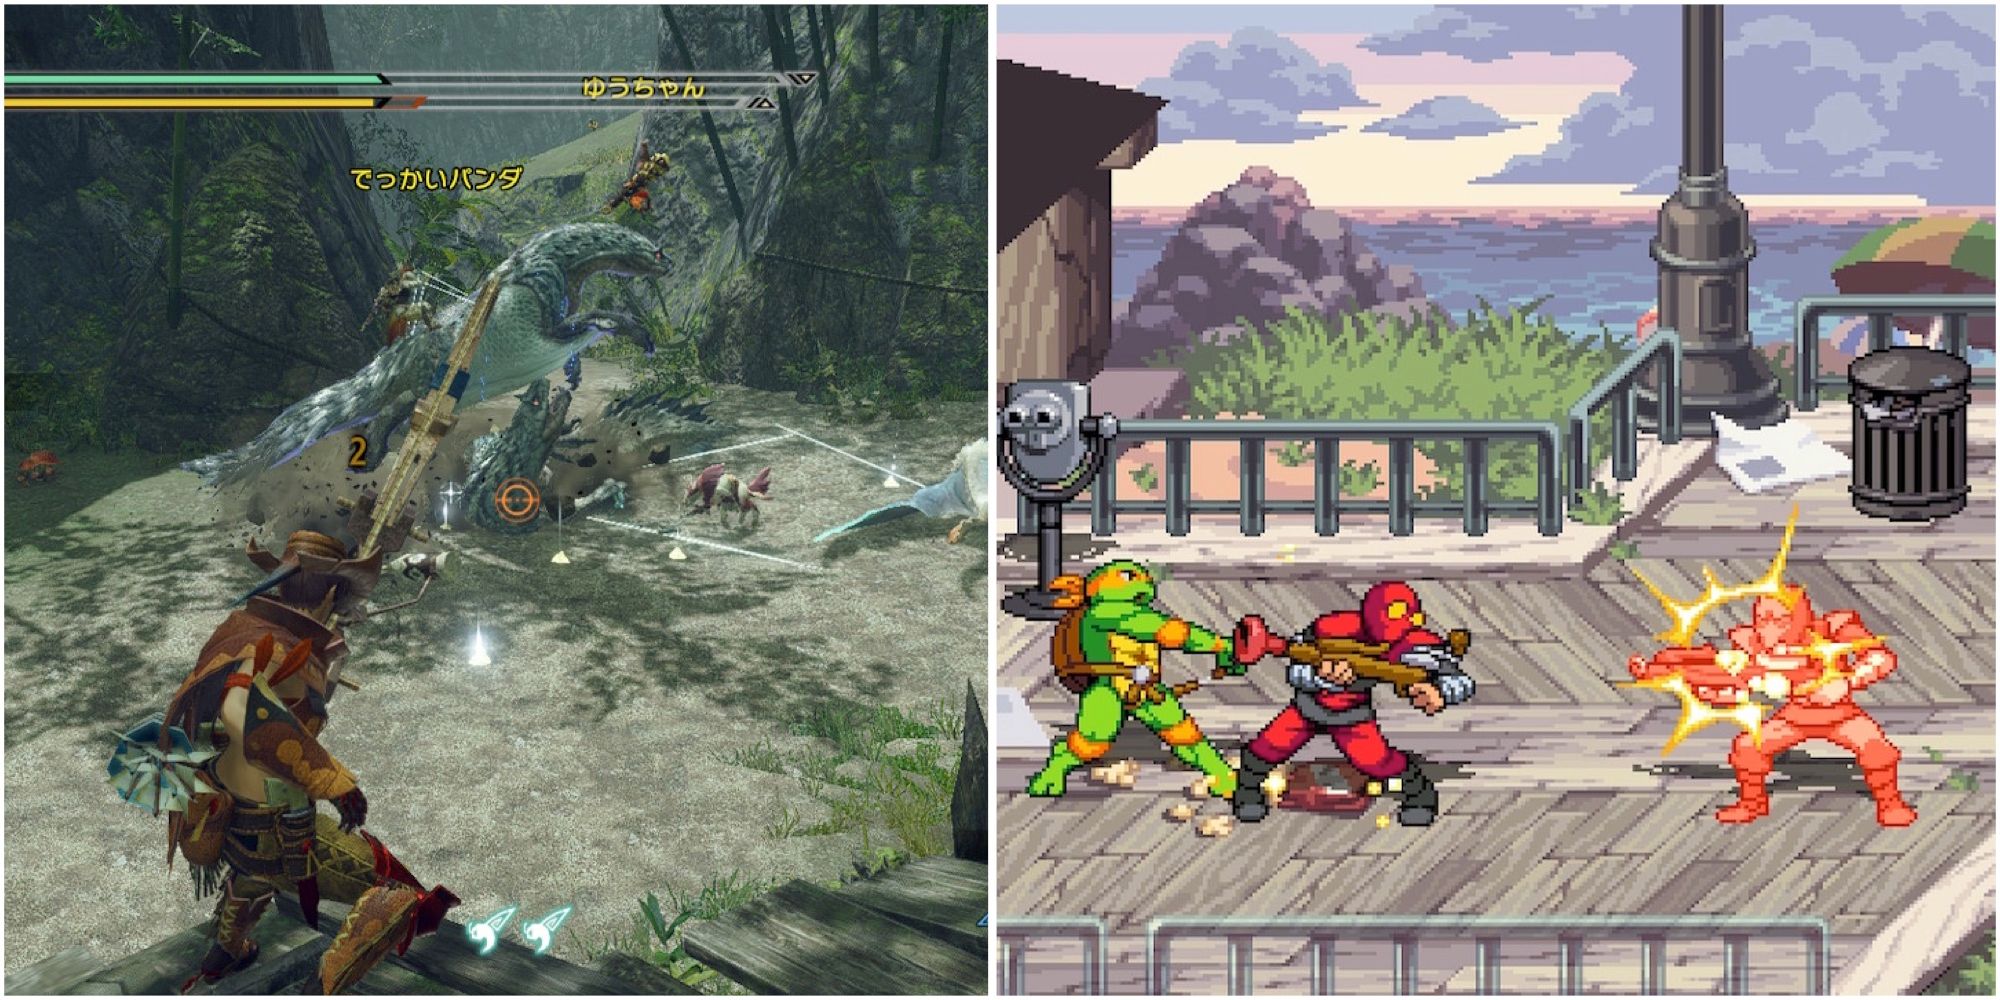 Fighting enemies in Monster Hunter Rise and Teenage Mutant Ninja Turtles Shredder's Revenge